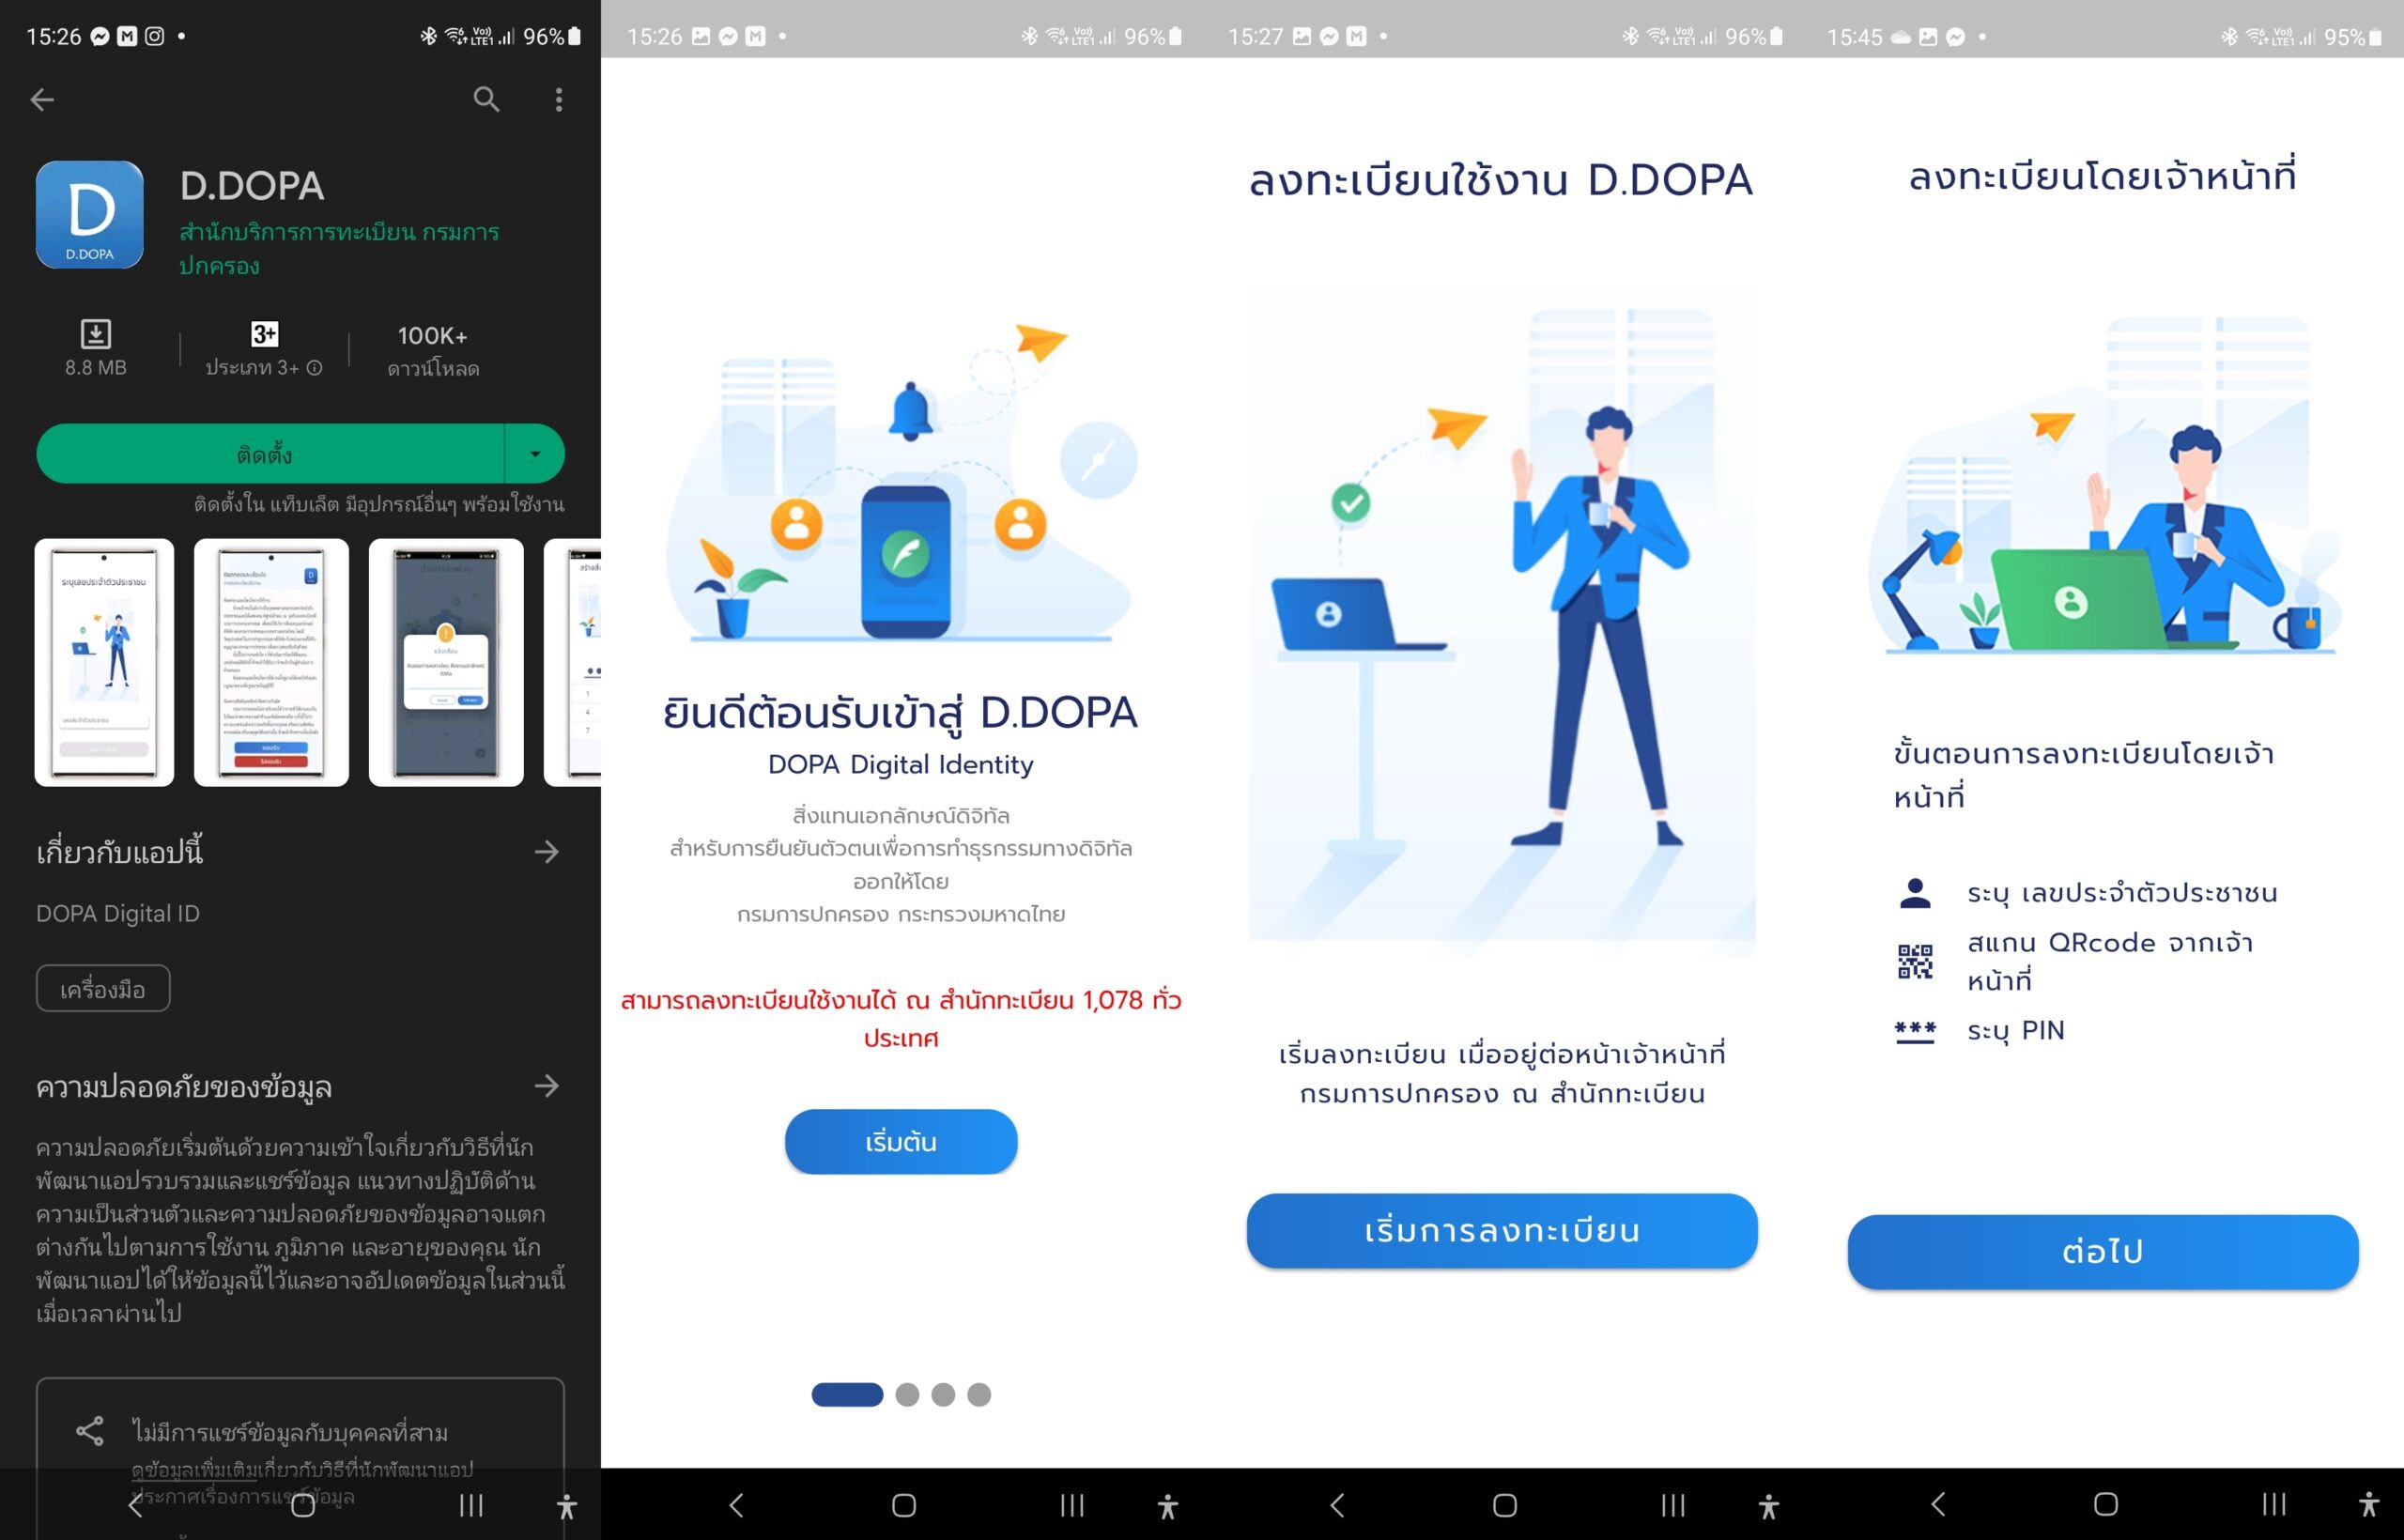 Screenshot 20230103 152604 Google Play Store tile scaled | D.DOPA | คนไทยใช้ Digital ID บัตรประชาชนบนสมาร์ทโฟนแทนบัตรตัวจริงได้แล้ว พร้อมวิธีทำ